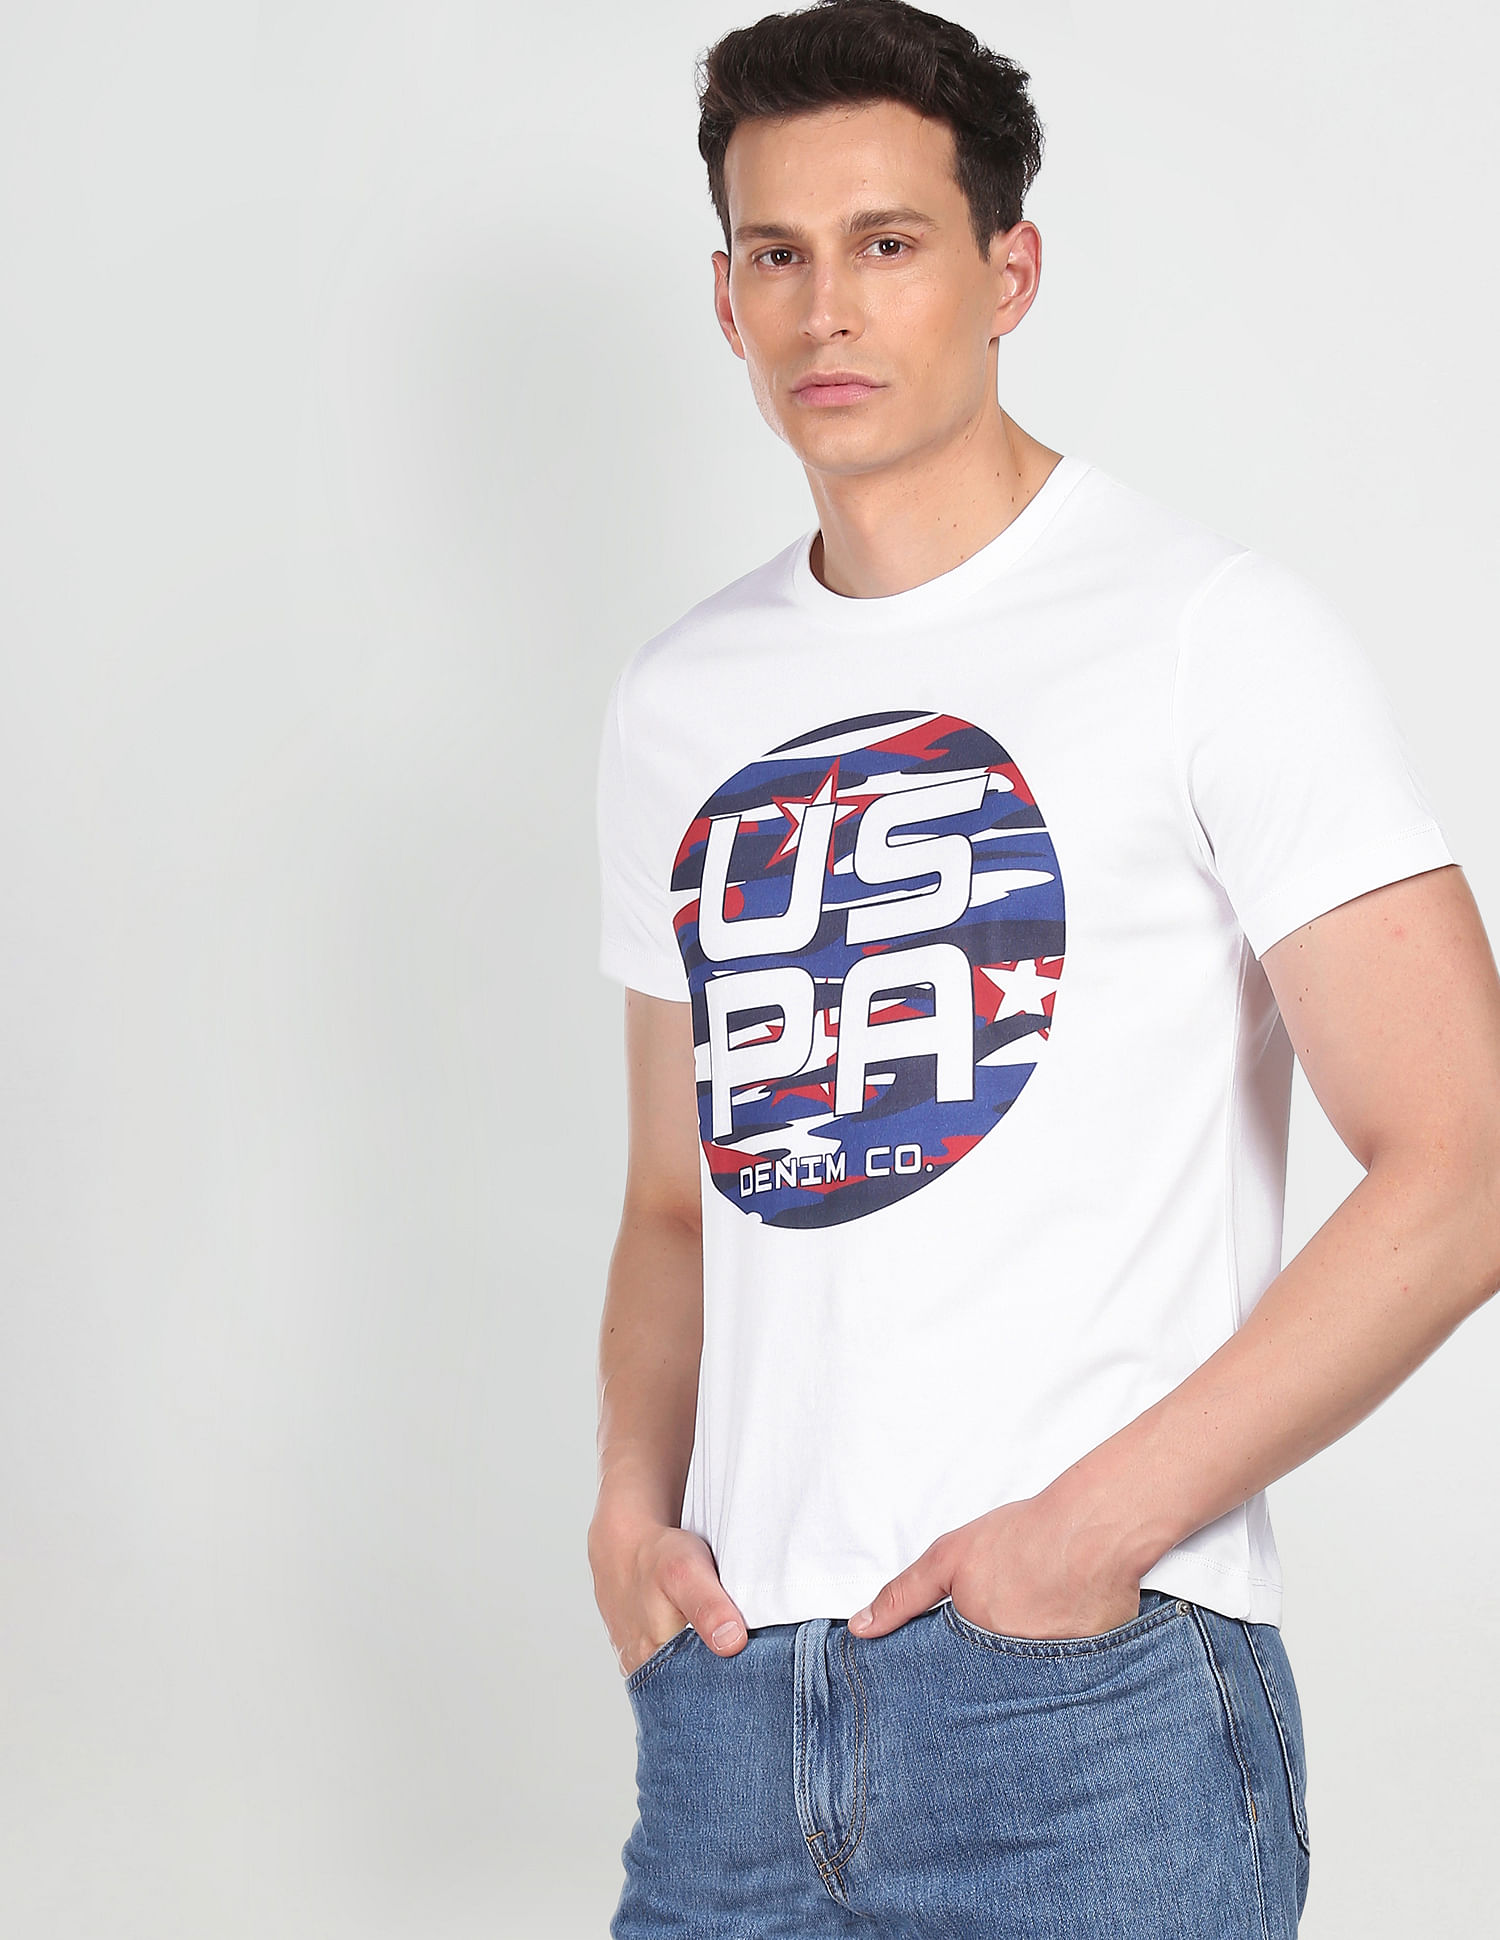 Buy U.S. Polo Assn. Denim Co. Cotton Brand Print T-Shirt - NNNOW.com